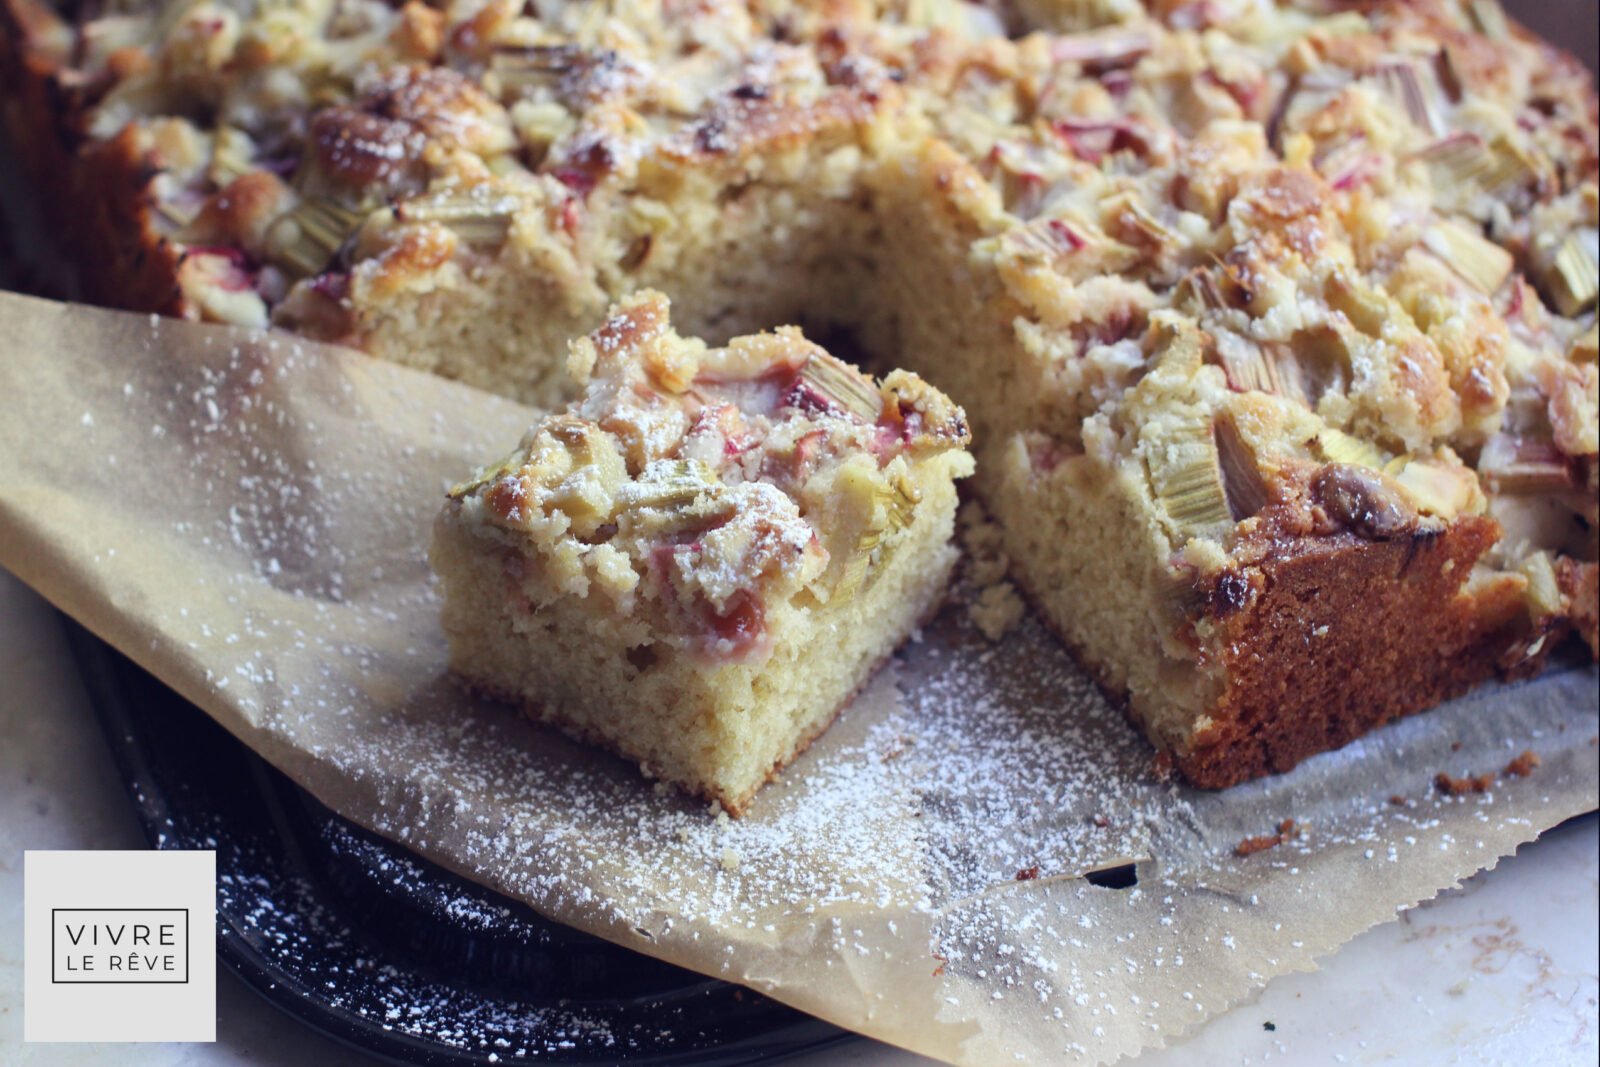 Our Favourite Spiced Rhubarb Cake Recipe